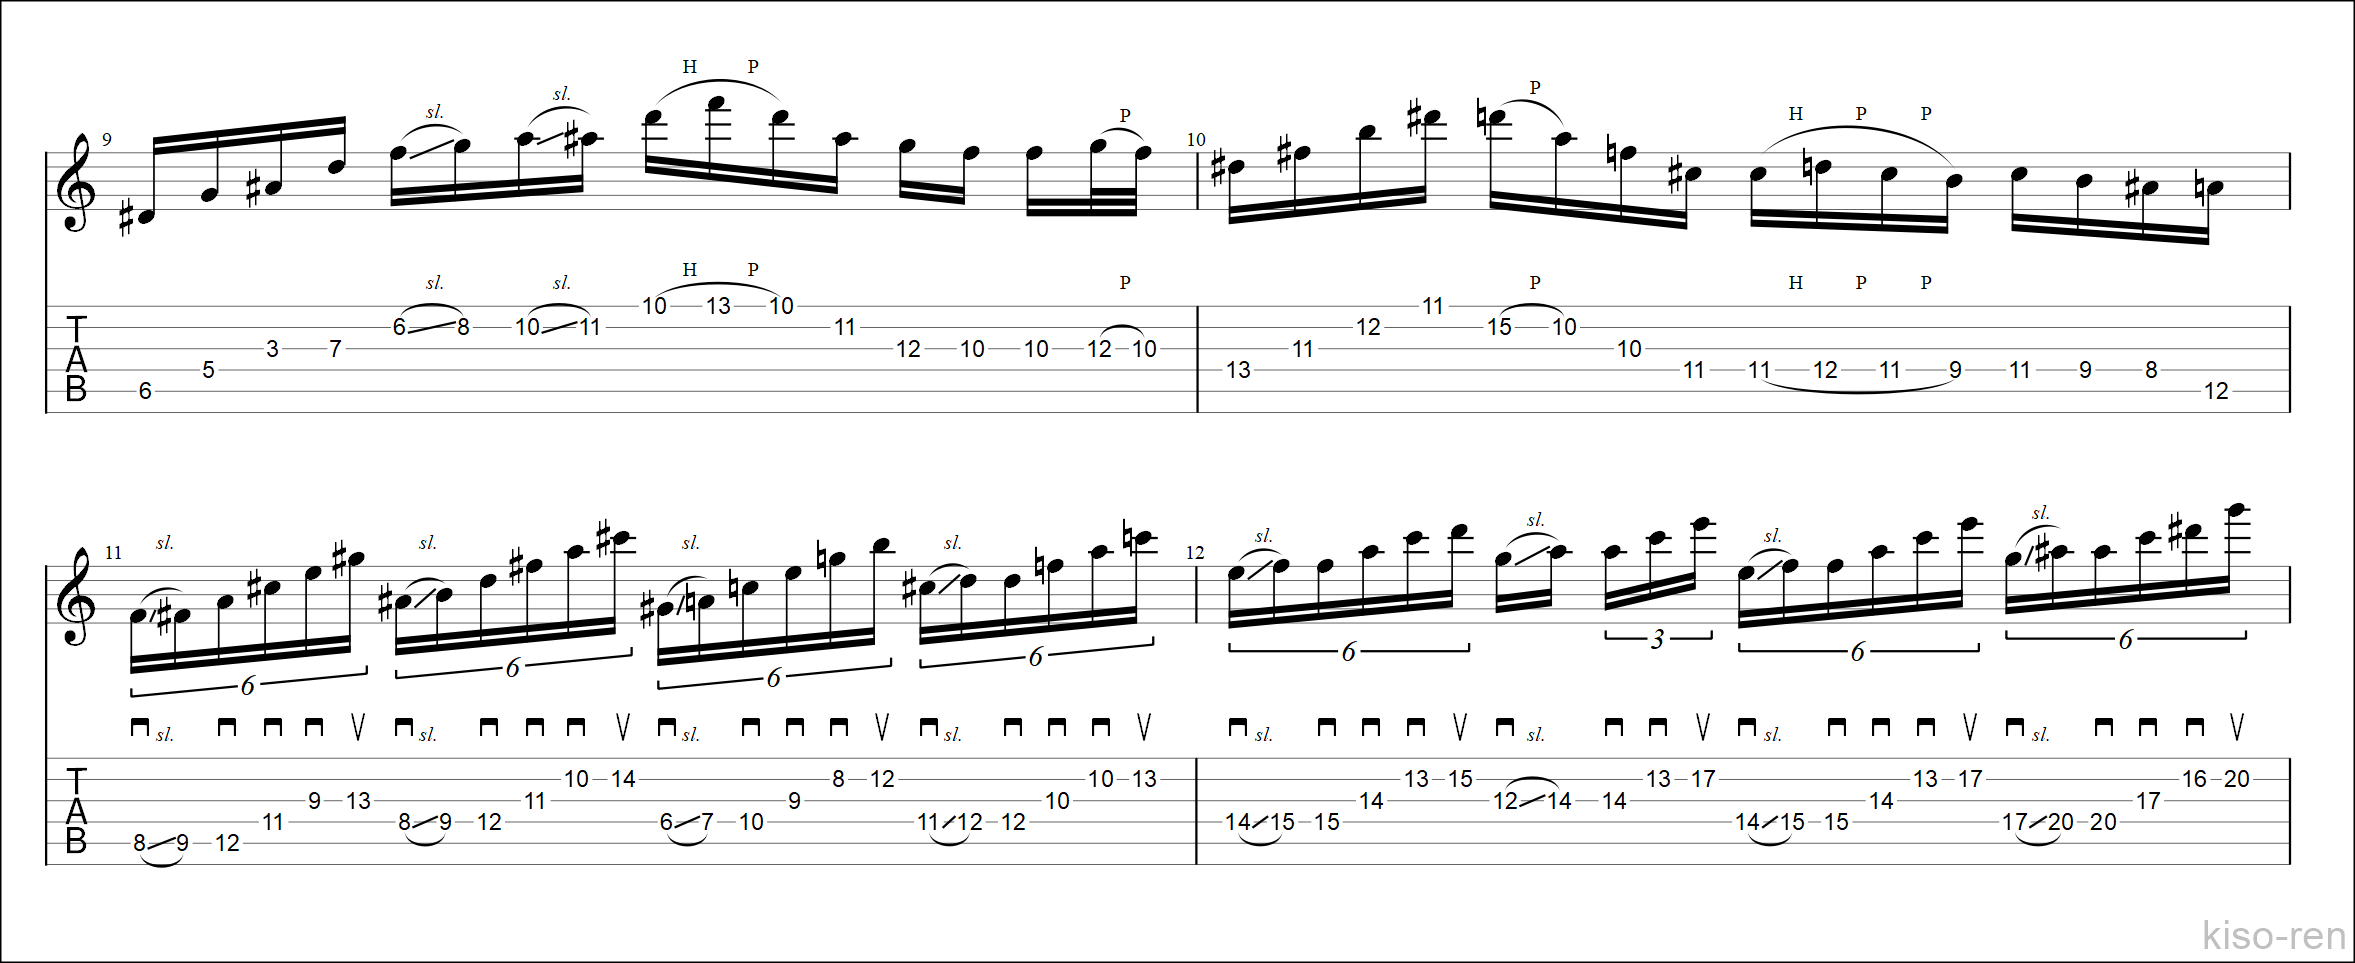 【TAB】Unity / Richie Kotzen Slow Guitar Fusion Lick Practice ユニティ リッチー･コッツェン スウィープ ピッキング基礎練習ゆっくり【Guitar Picking Vol.61】